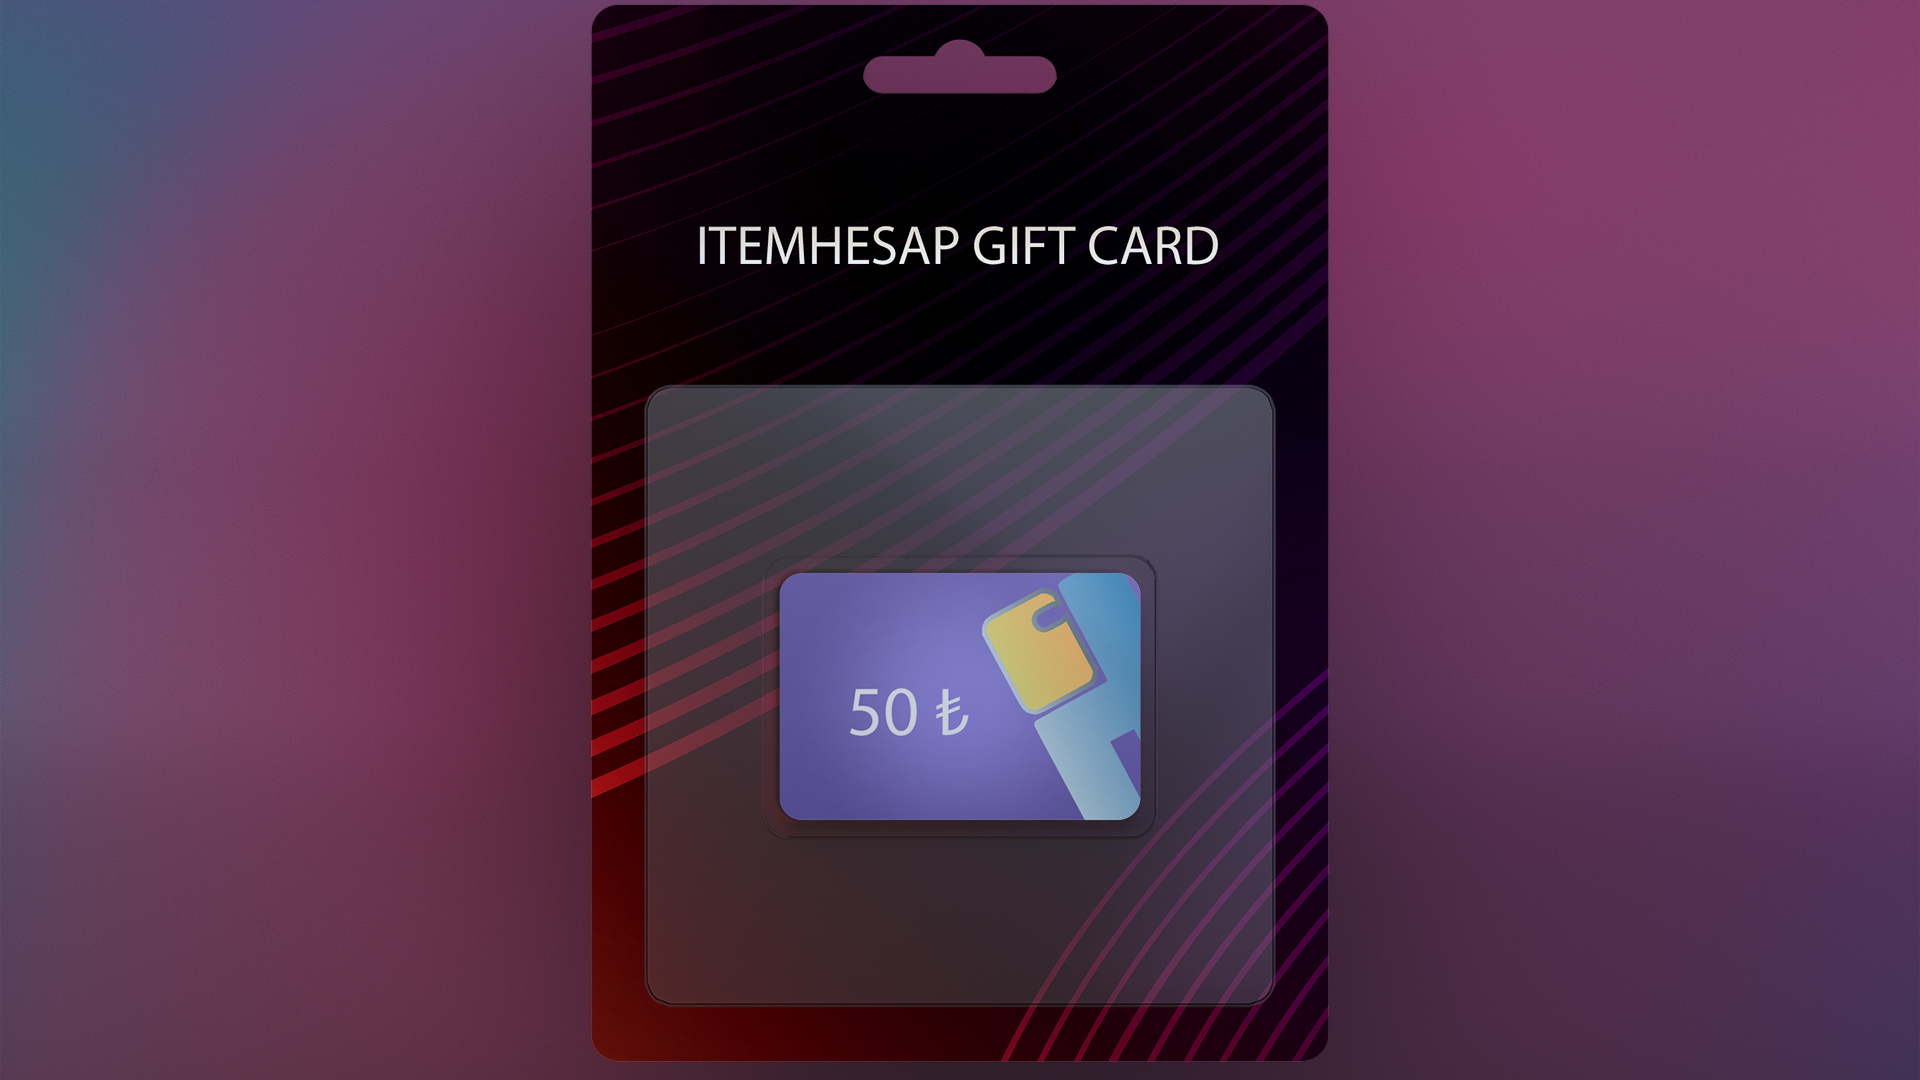 ItemHesap ₺50 Gift Card [USD 3.53]